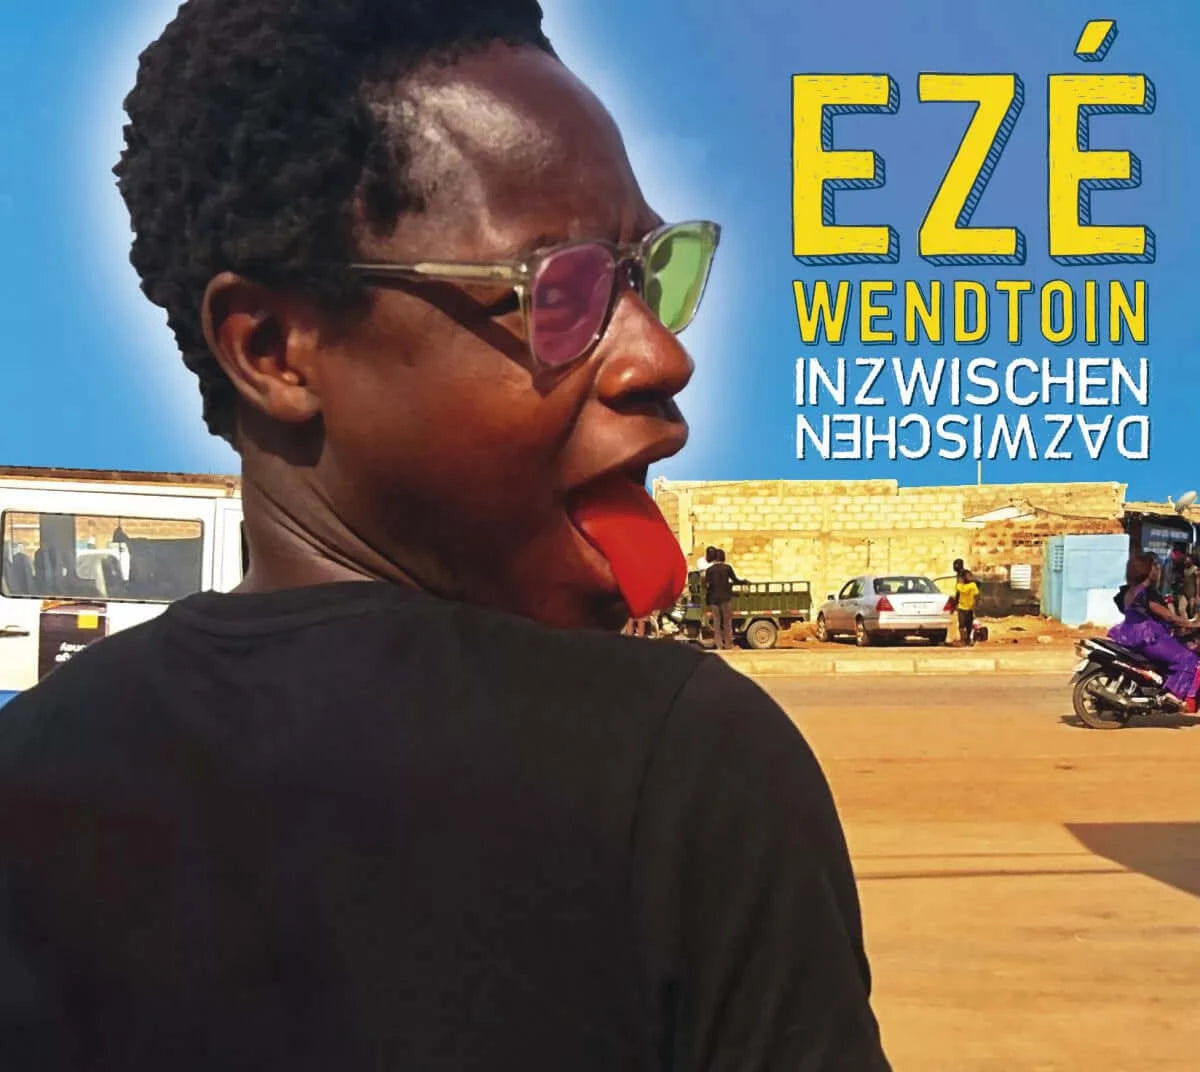 Ezé Wendtoin - Zwischenzeit Dazwischen (2019) | Double vinyl / CD in digipak incl. download